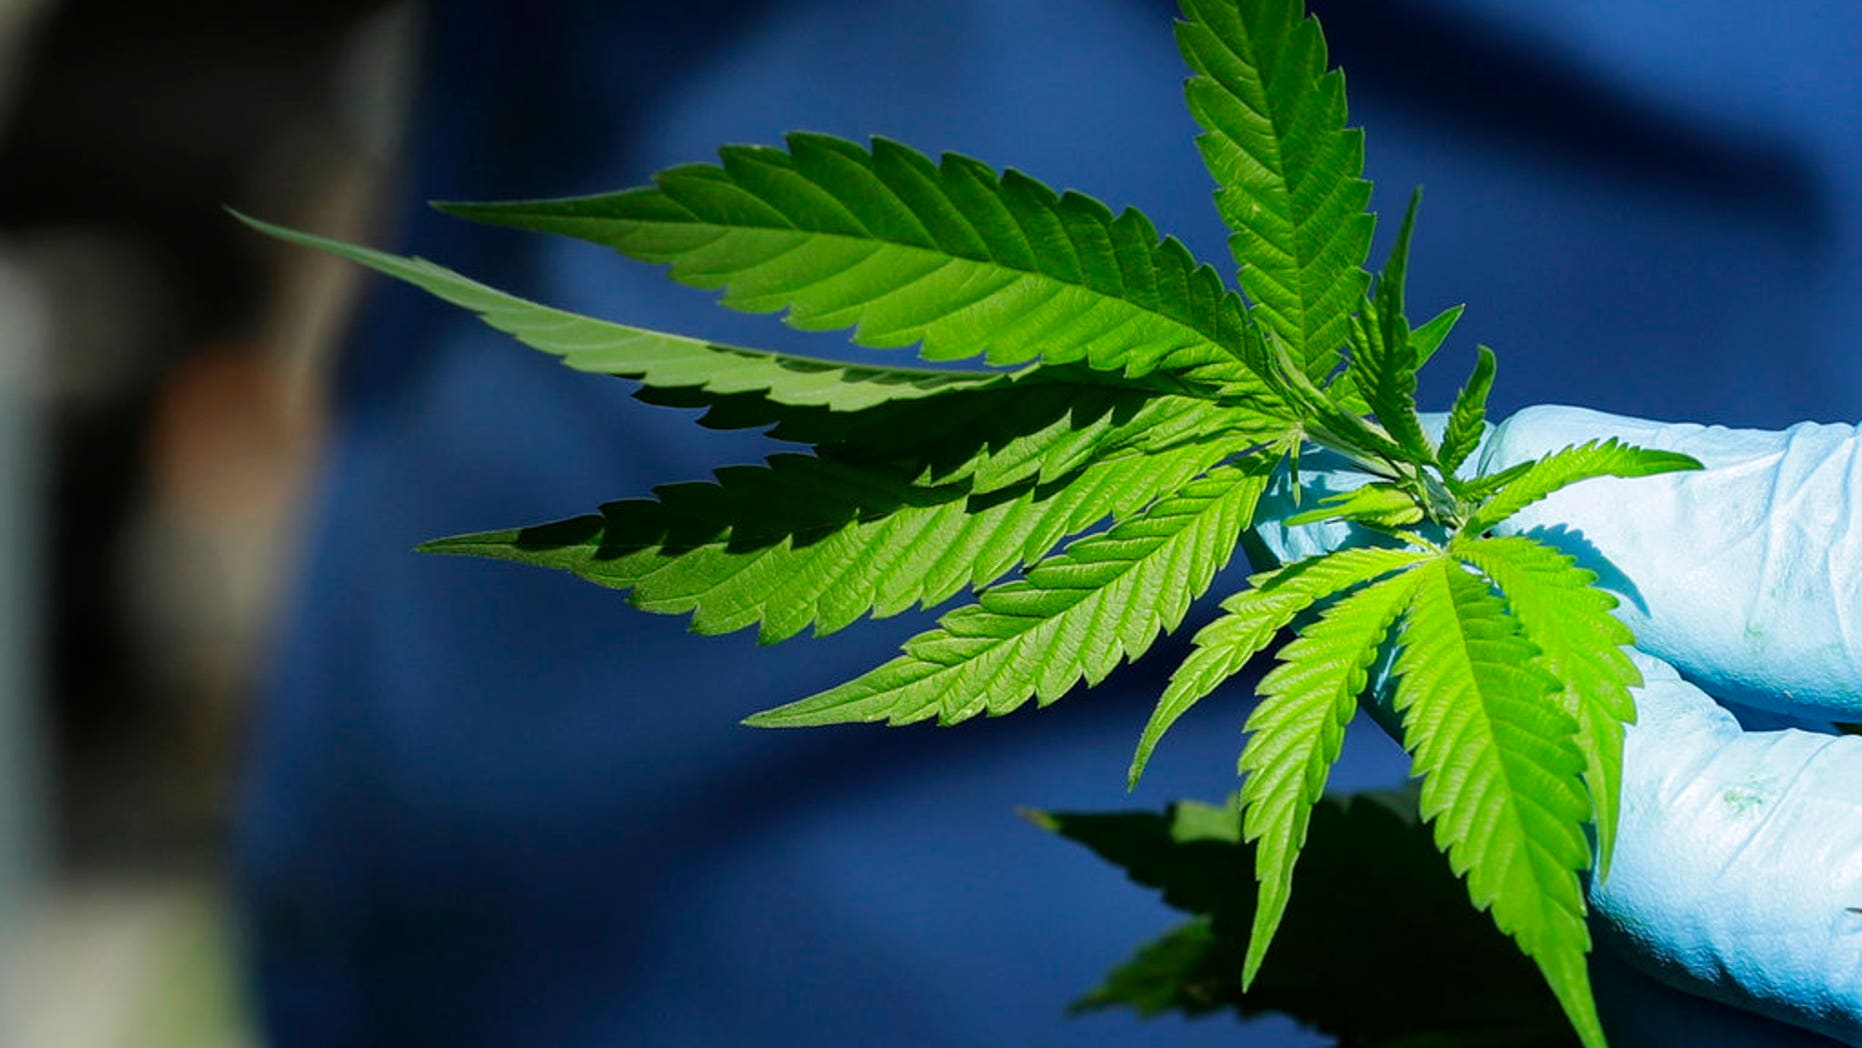 The people of North Dakota vote to legalize marijuana for recreational purposes in November.